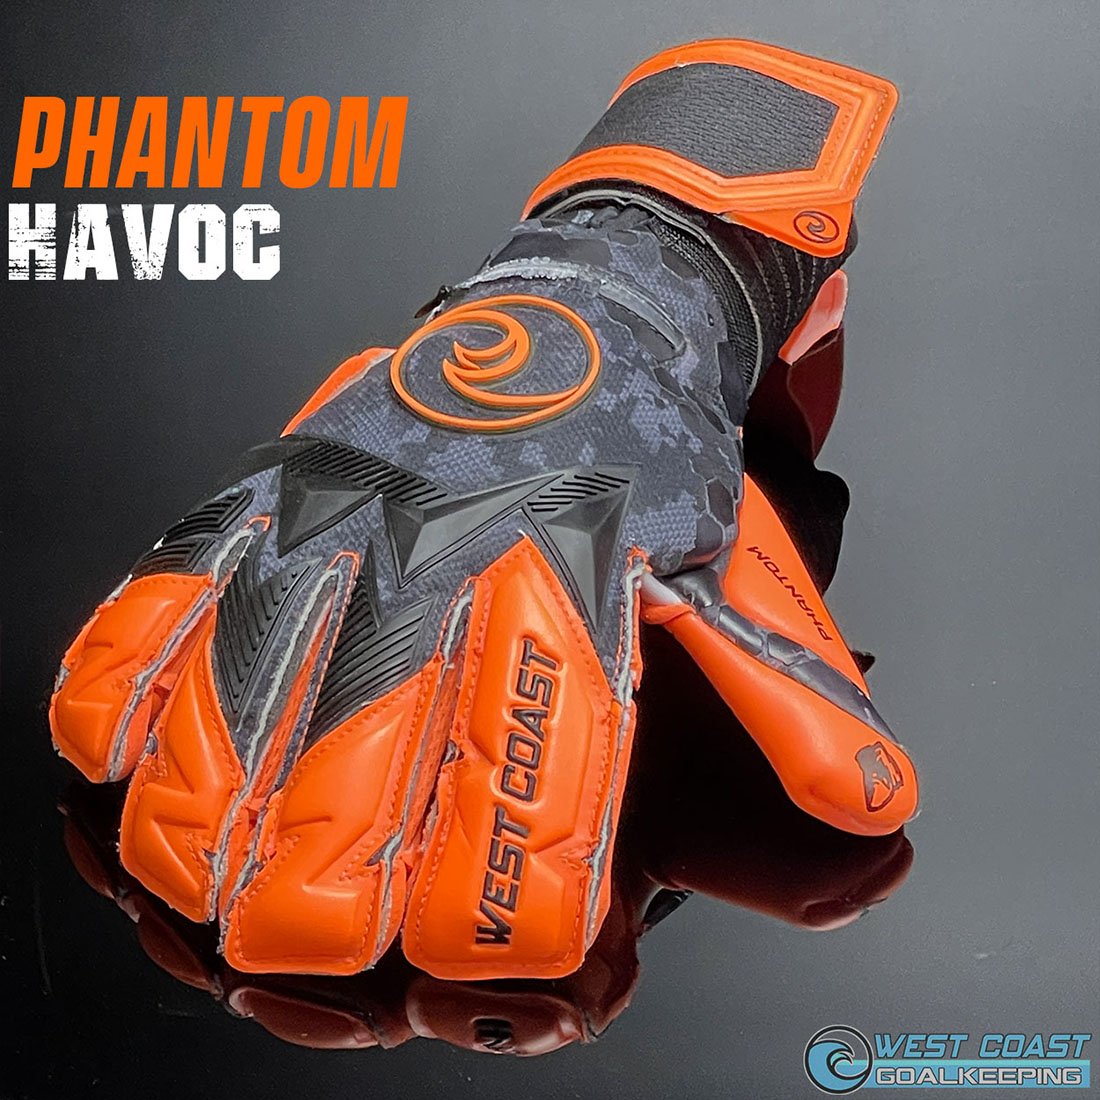 Phantom HAVOC - West Coast Goalkeeping